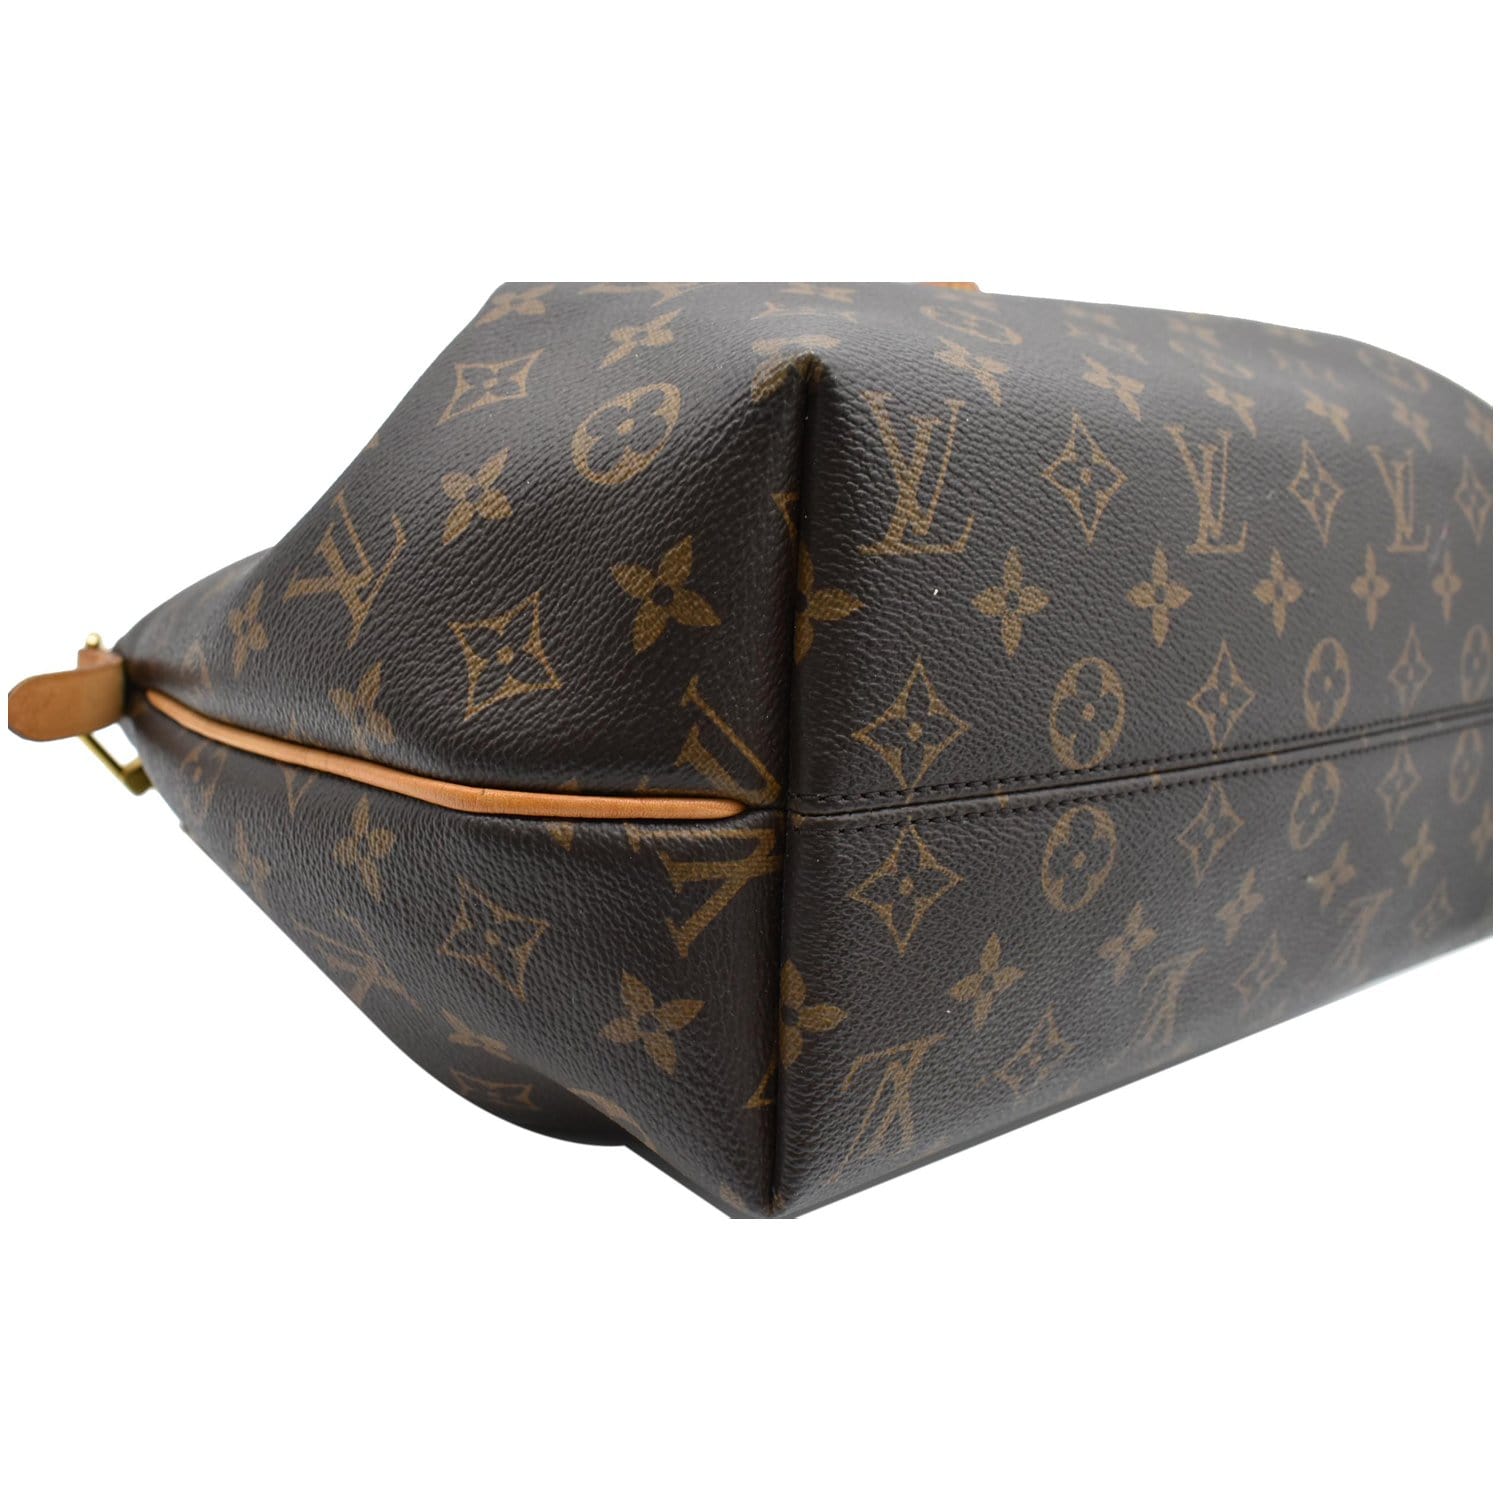 Louis Vuitton Turenne MM Monogram Canvas Shoulder Bag in Excellent